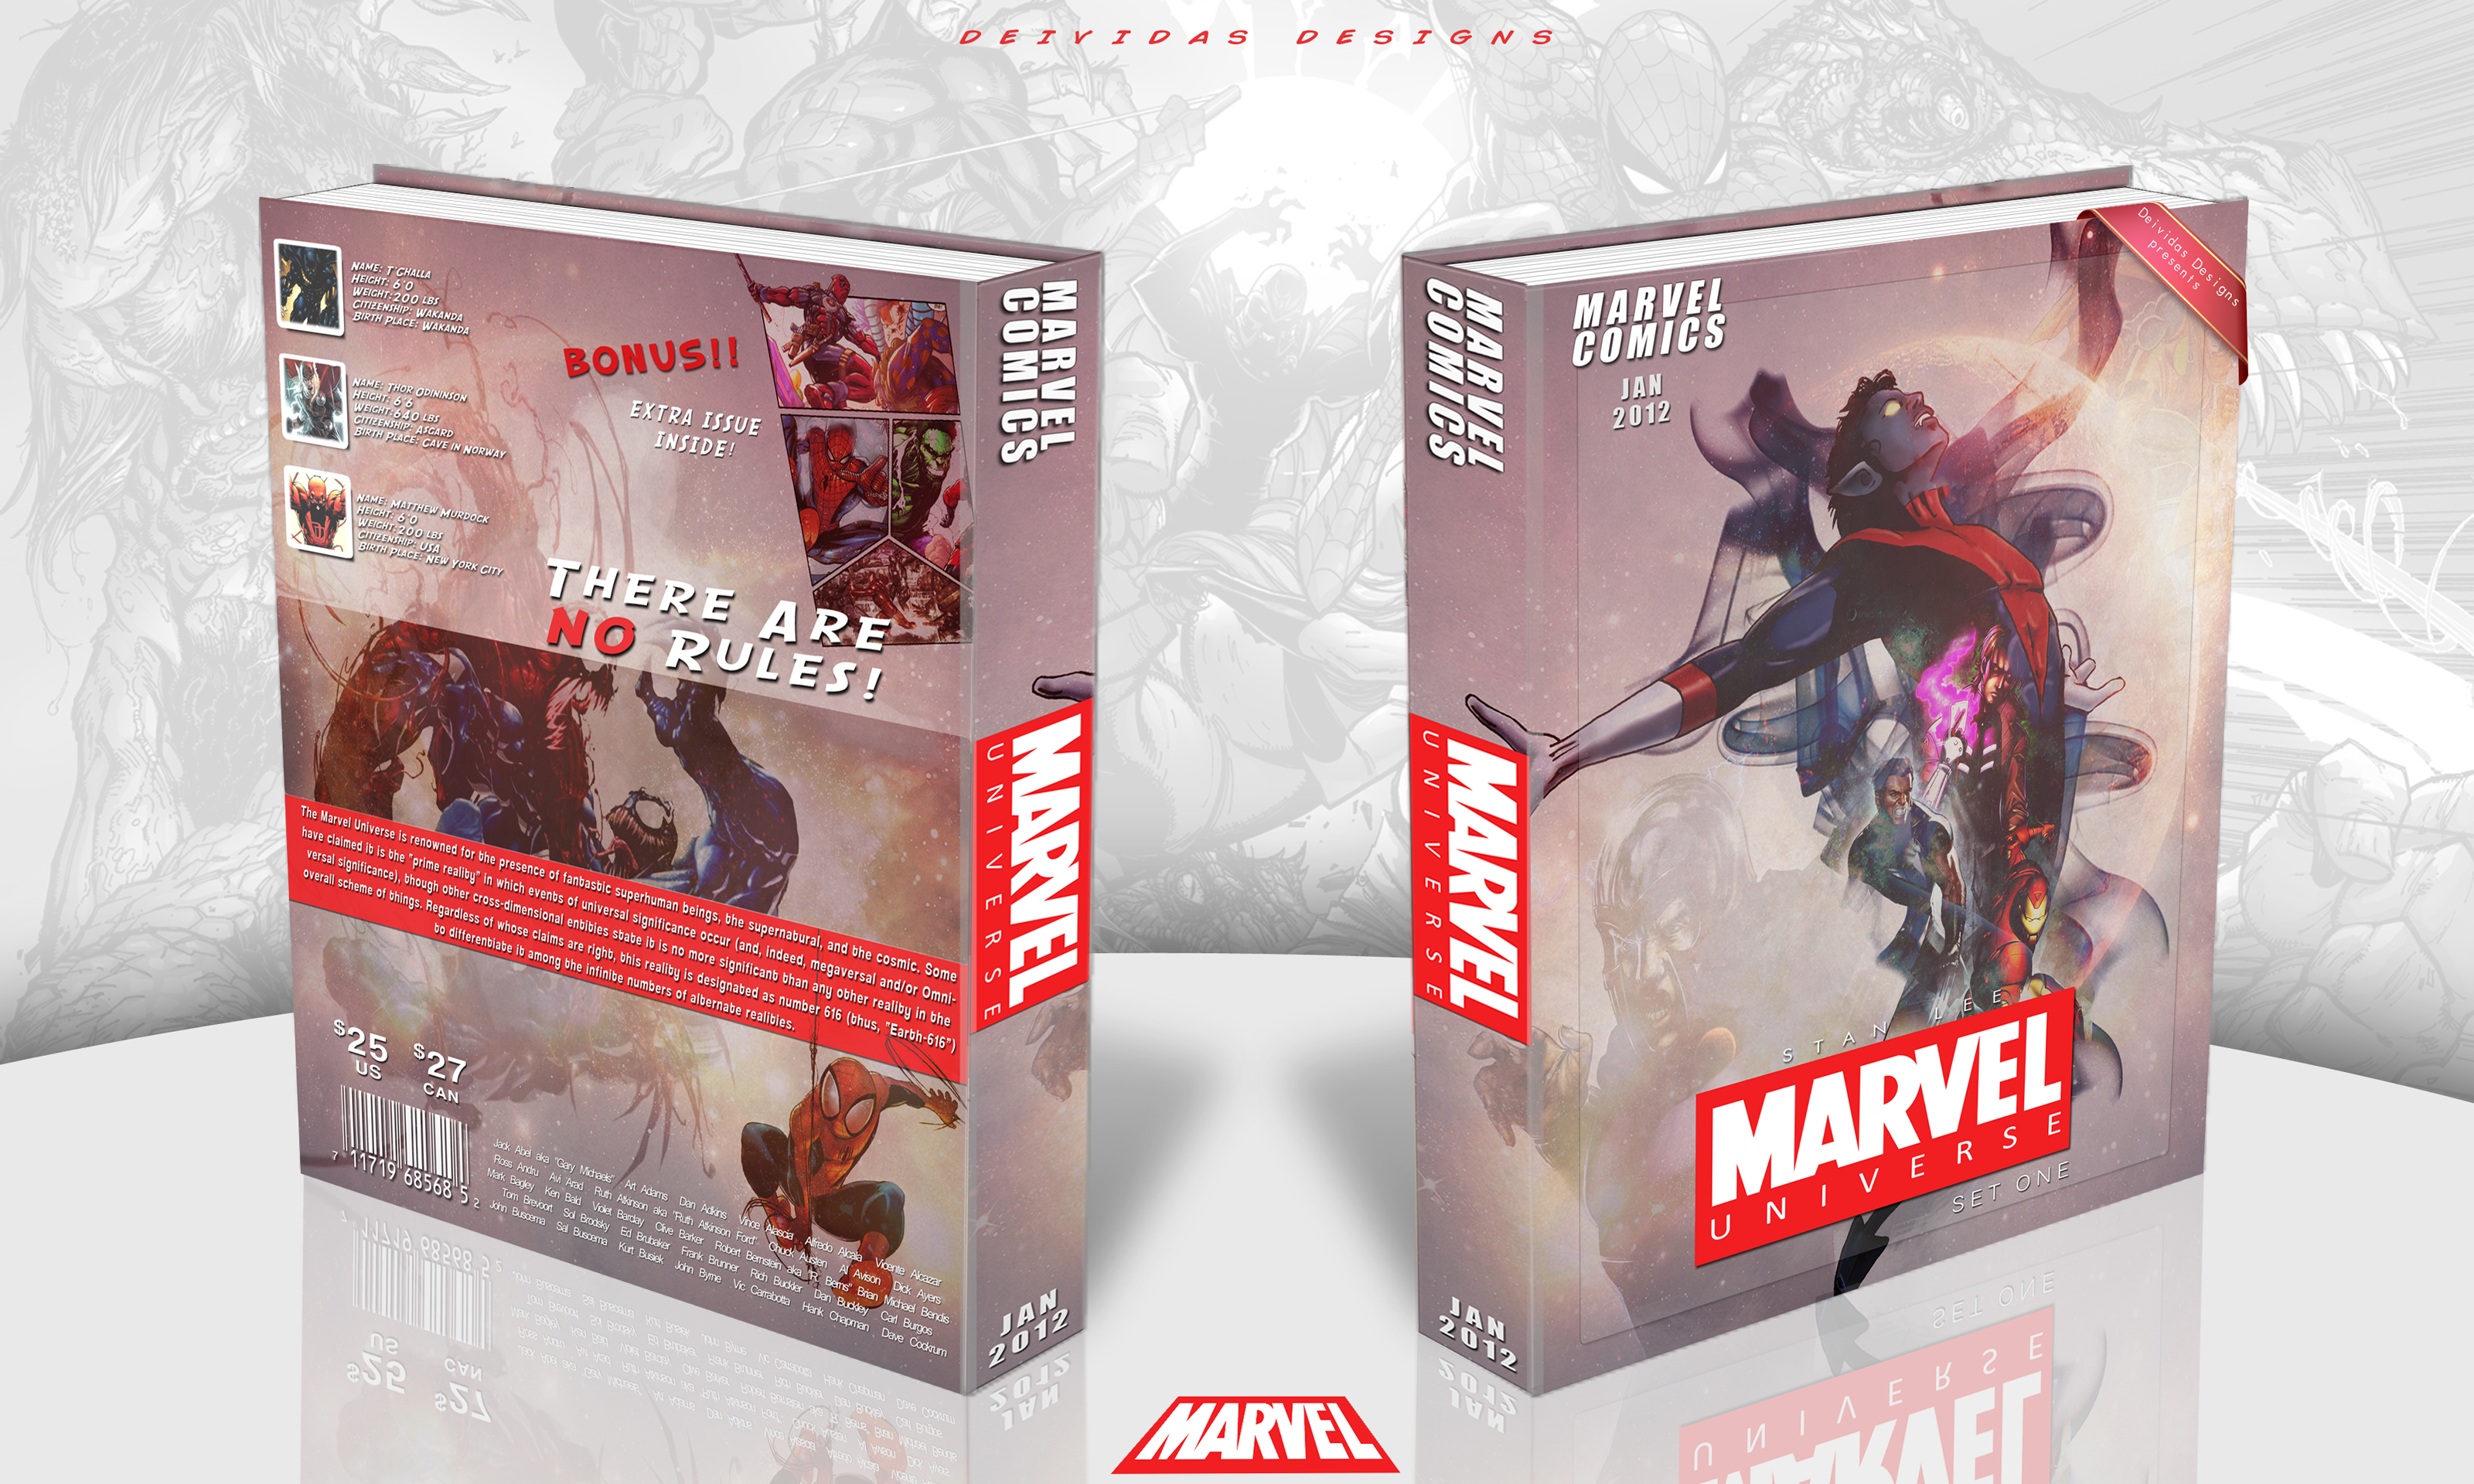 Marvel Universe Comic: Set One box cover